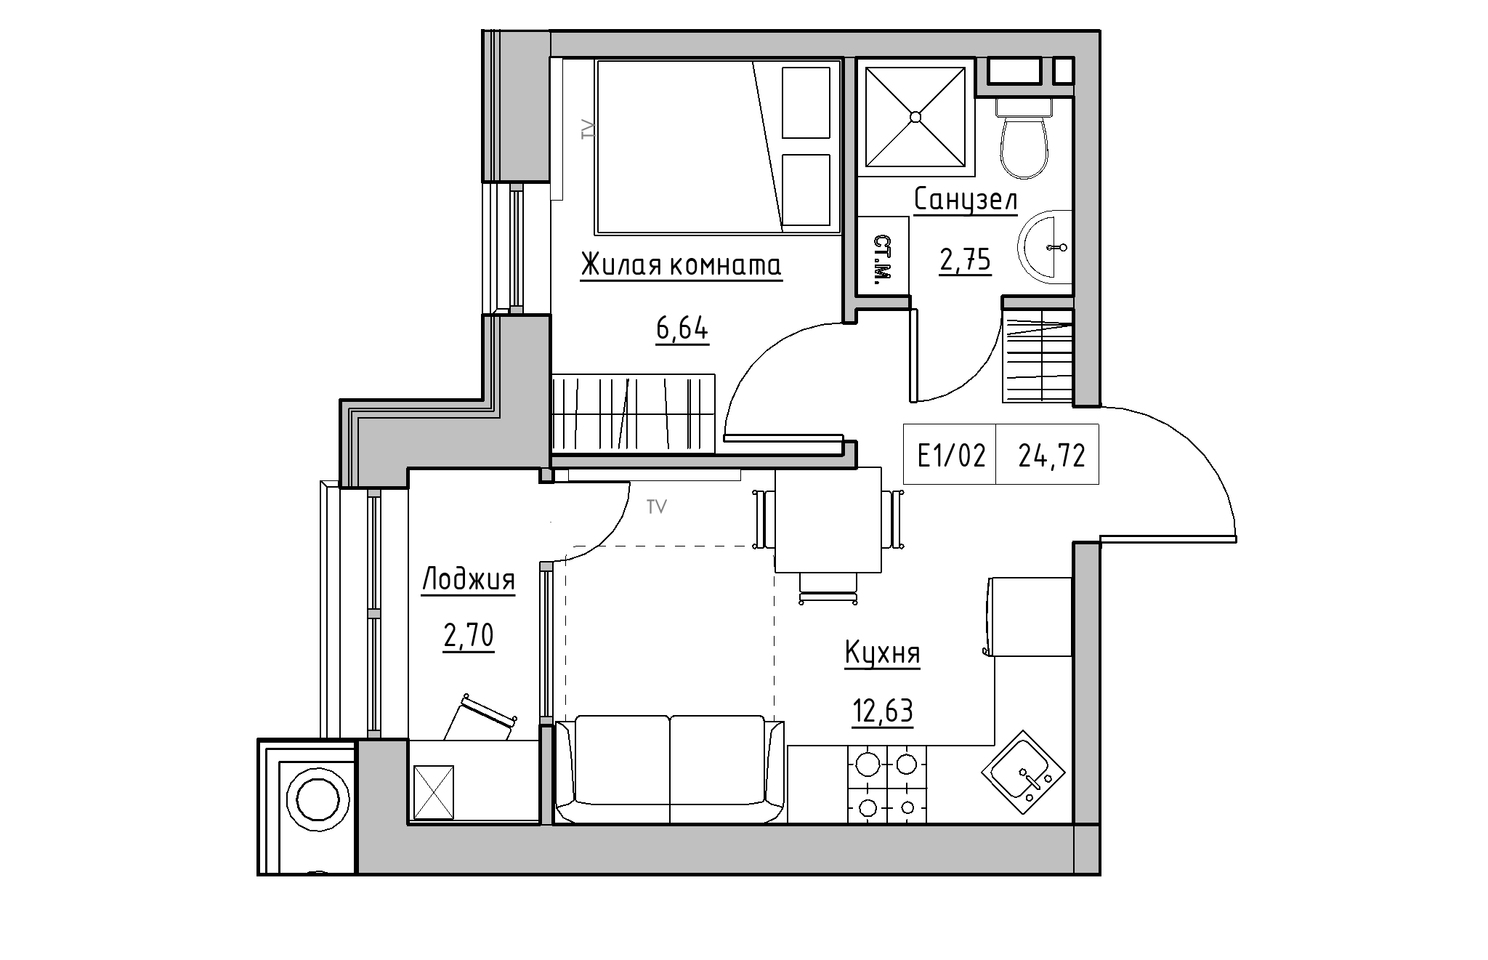 Planning 1-rm flats area 24.72m2, KS-010-04/0013.